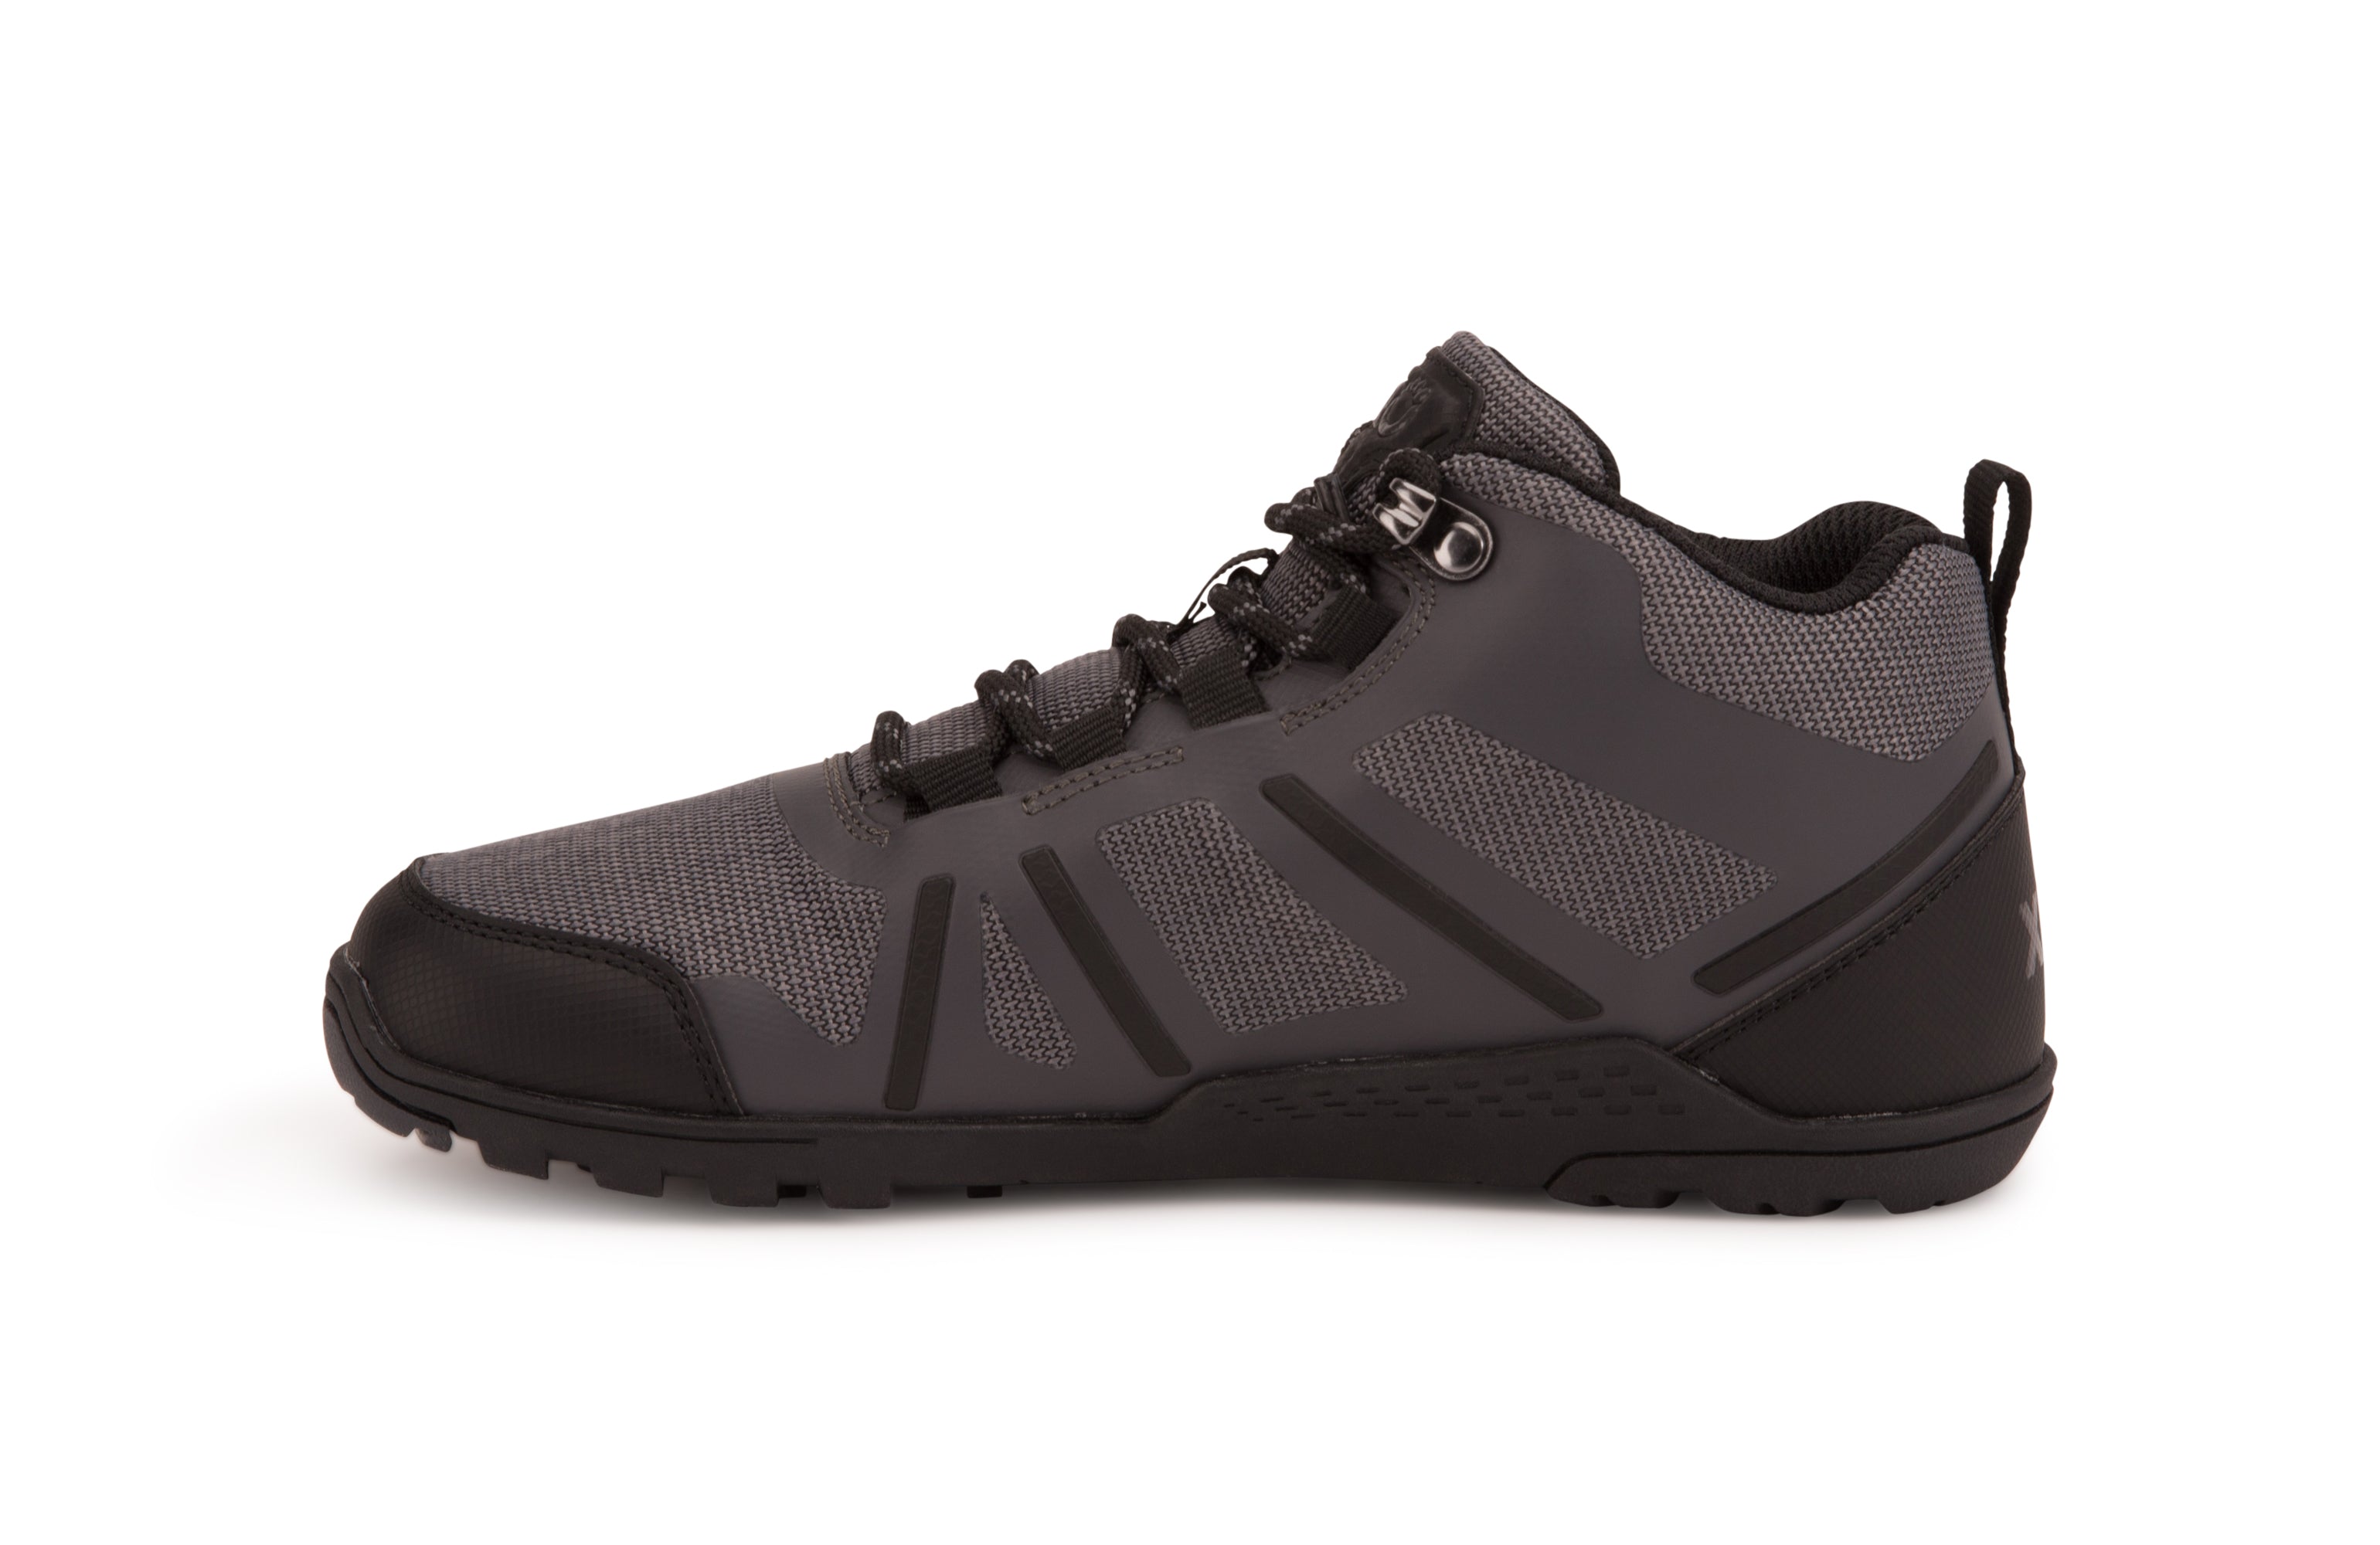 Xero Shoes Daylite Hiker Fusion Womens barfods vandrestøvler til kvinder i farven asphalt, inderside